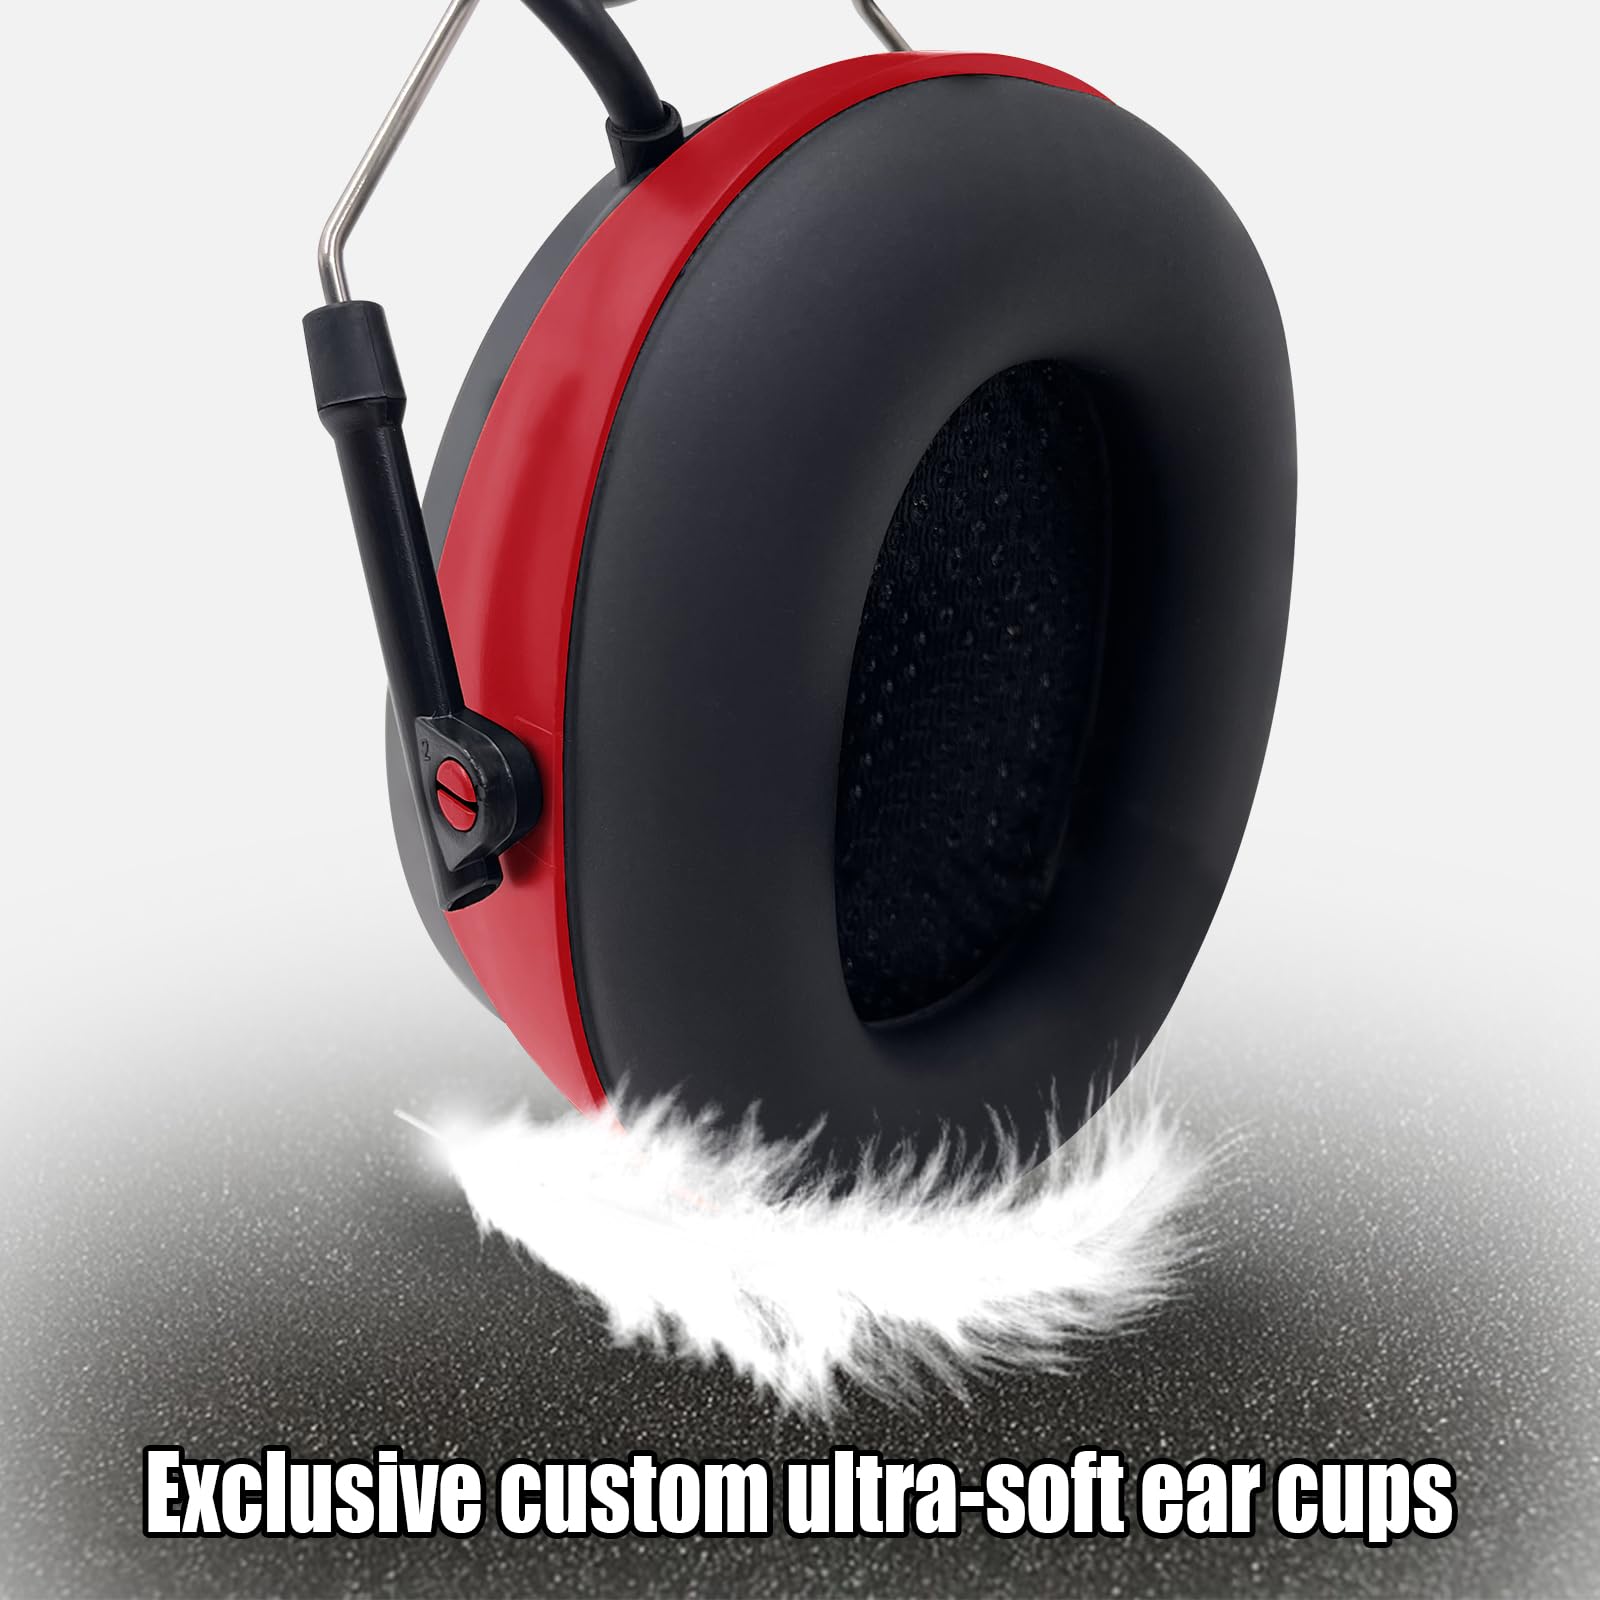 Mua （UPGRADED）Bluetooth Hearing Protection with Radio FM/AM, Safety  Earmuffs Headphone for Mowing,Workshops,NRR 25dB trên Amazon Mỹ chính hãng  2023 Giaonhan247